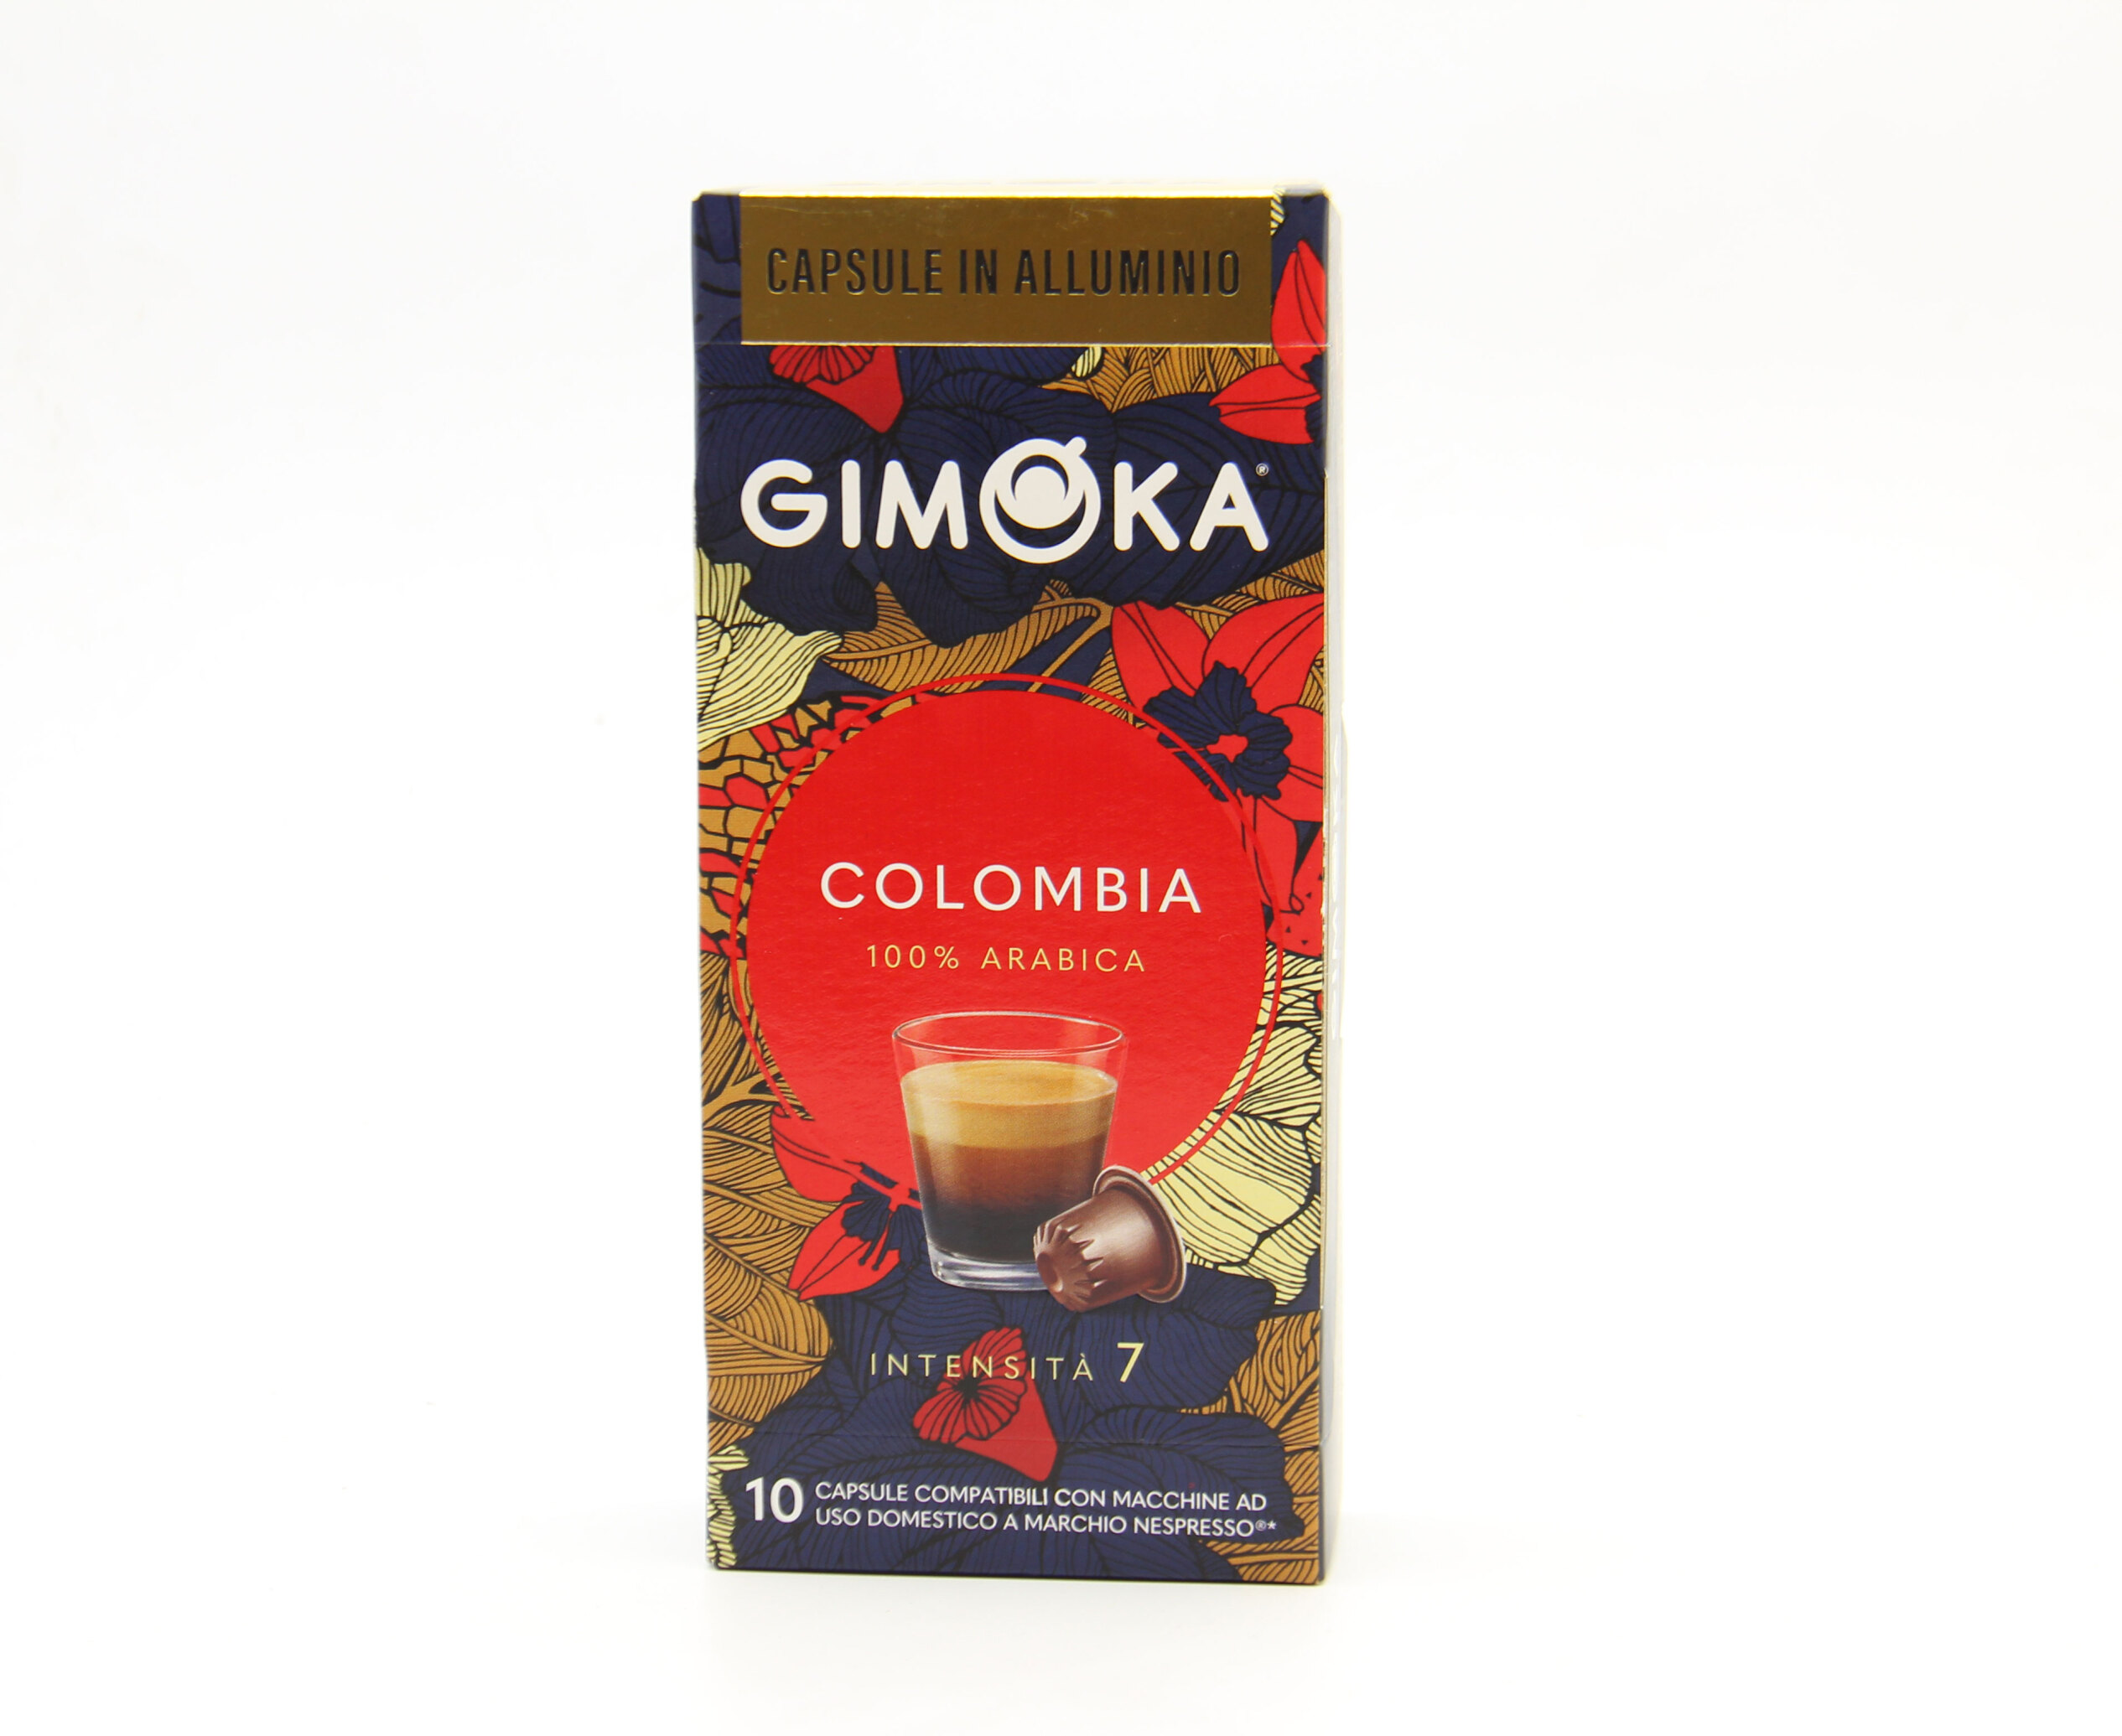  کپسول قهوه جیموکا کلمبیا 